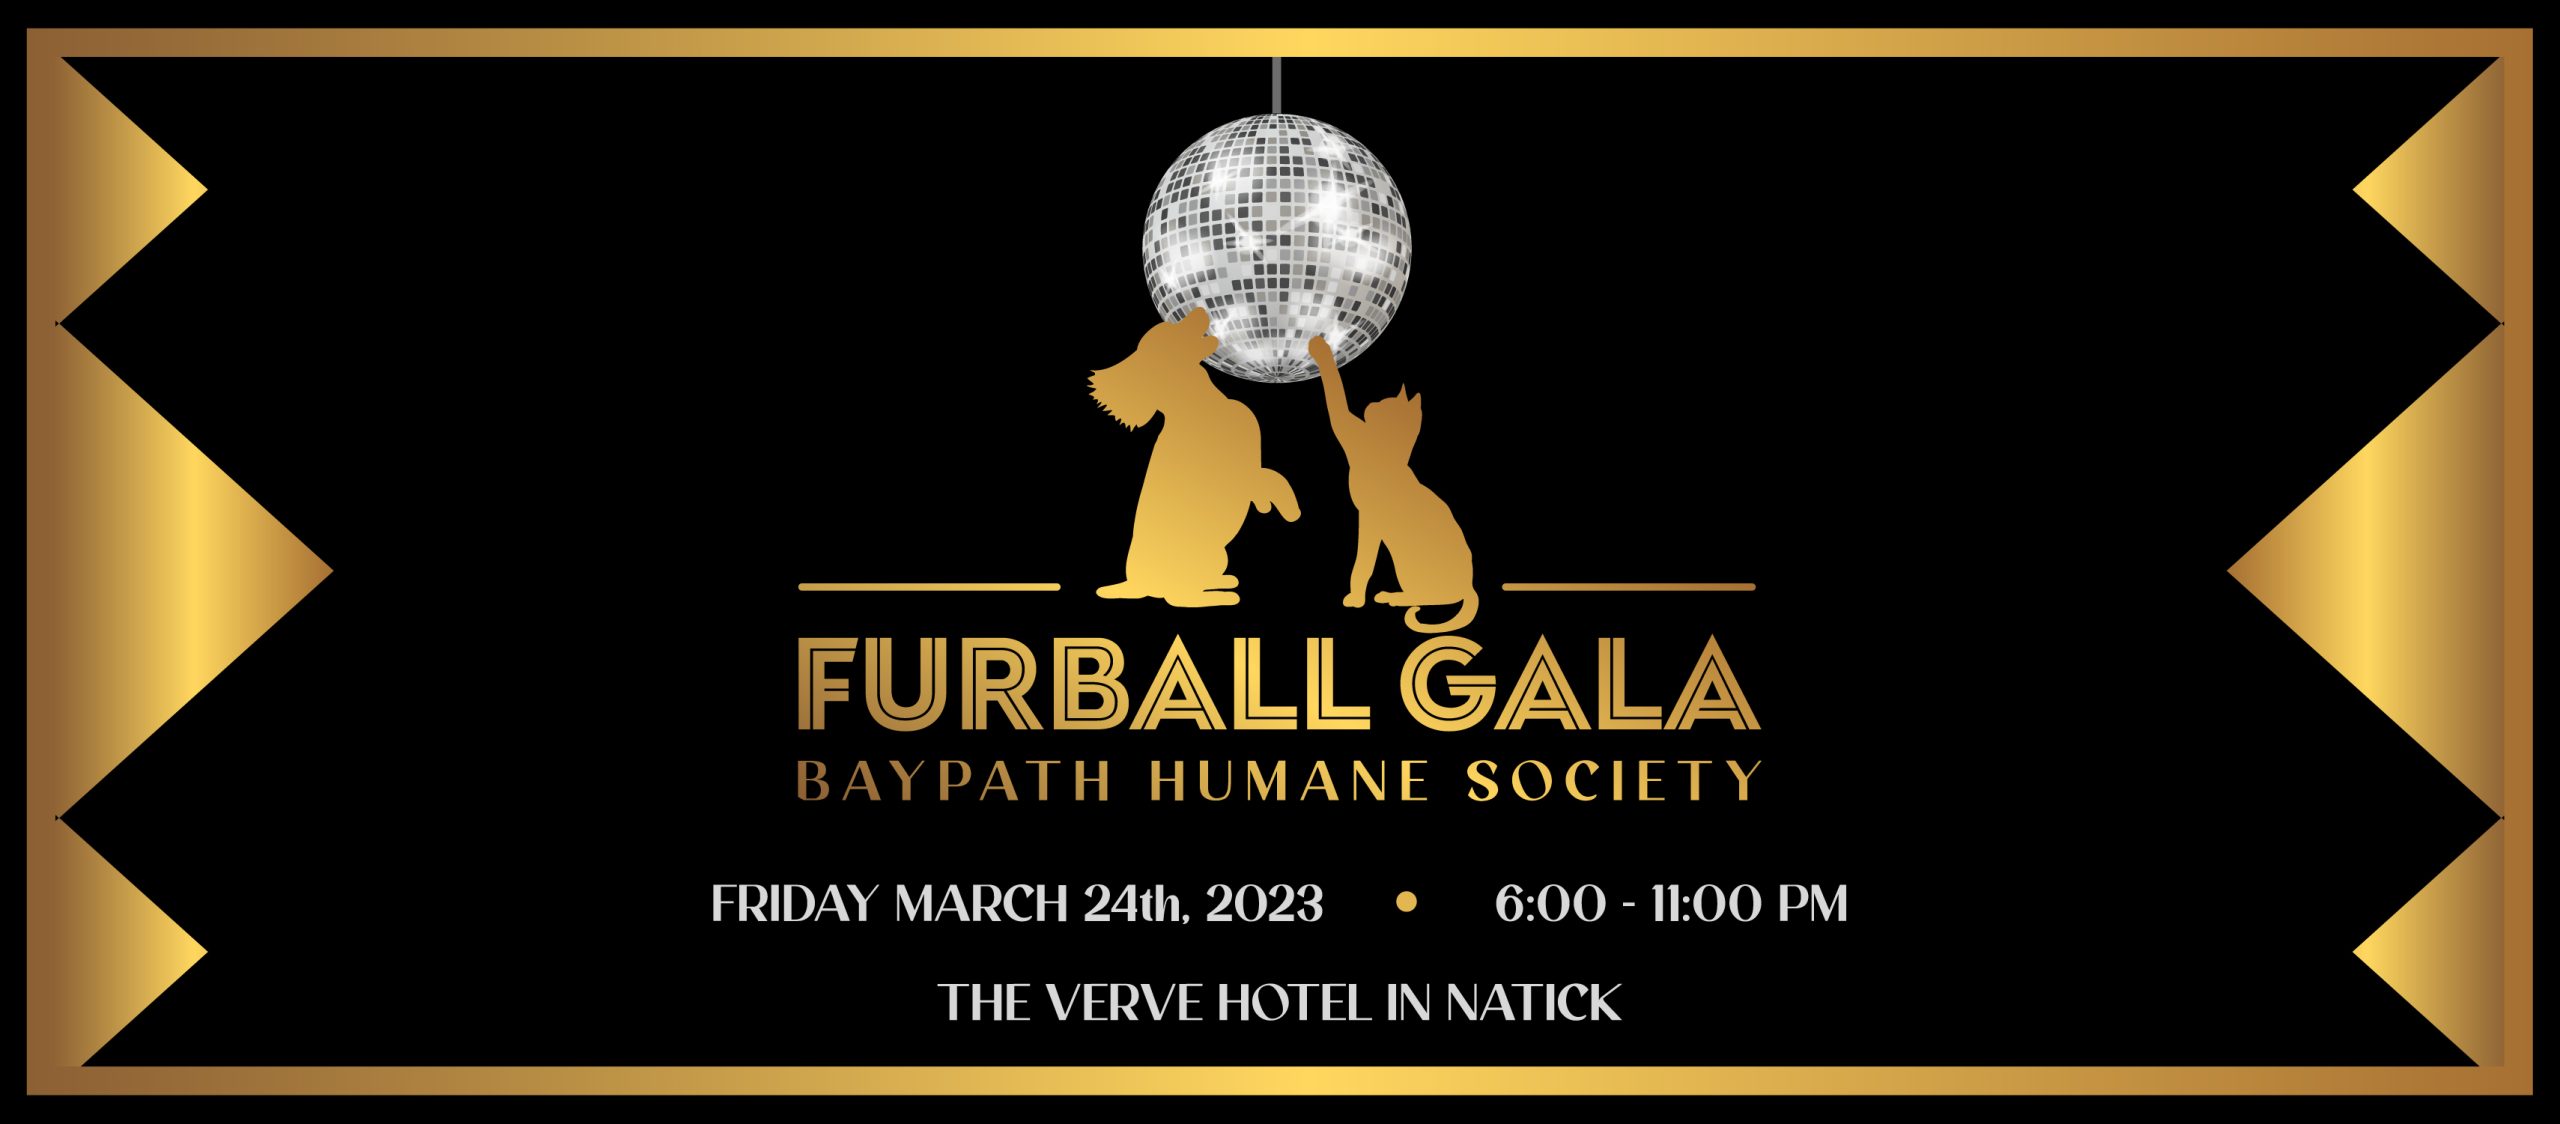 Baypath humane Society Furball Gala - Friday March 24th, 2023 - 6pm - 11pm